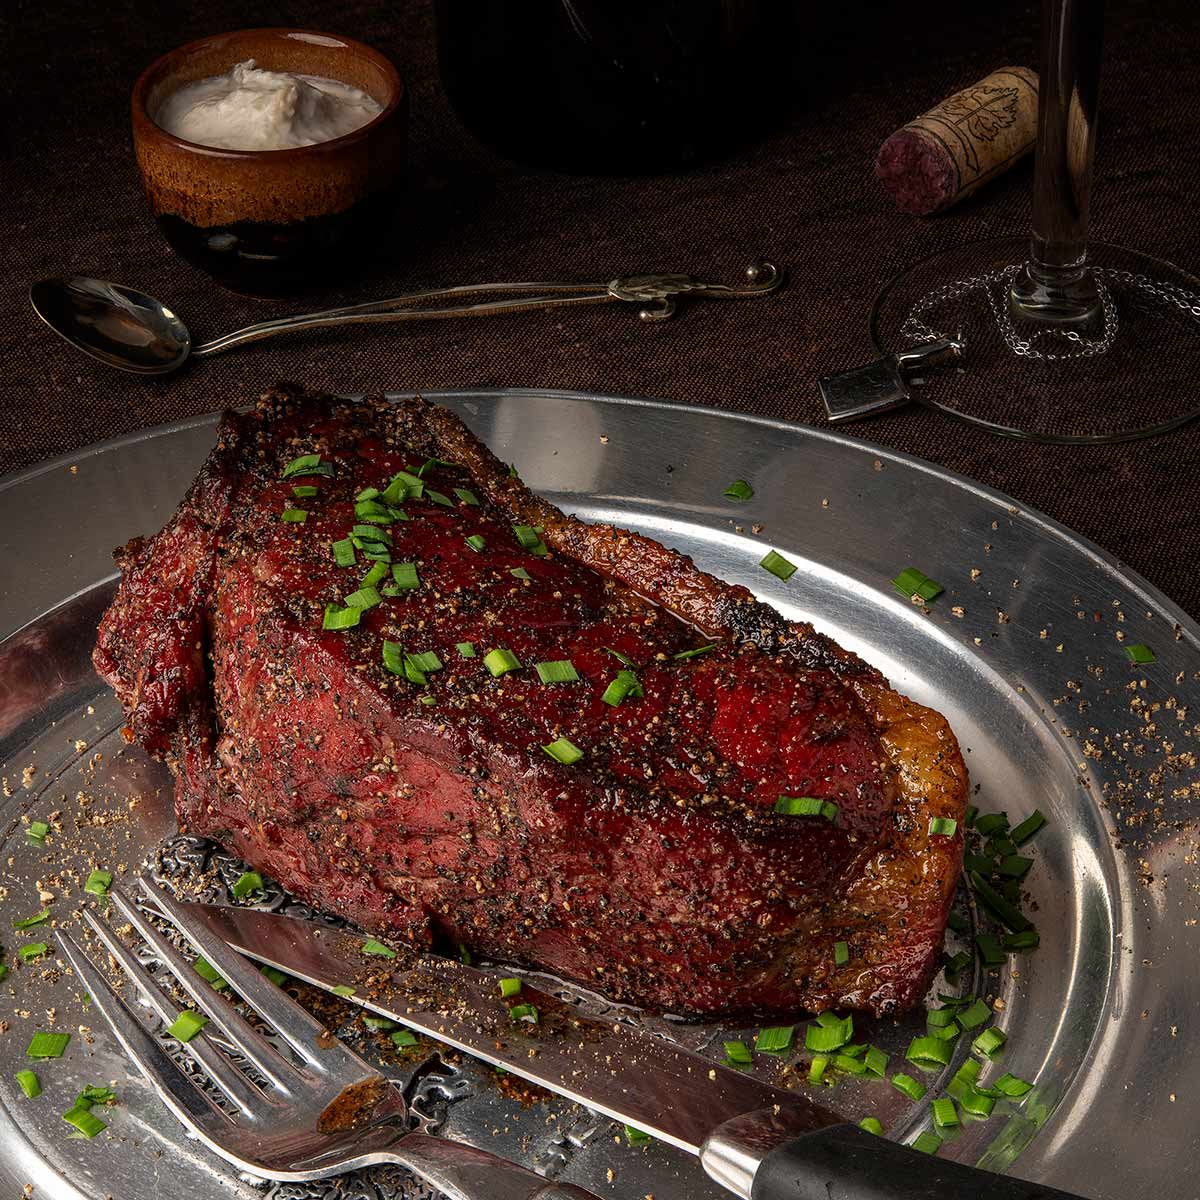 https://honest-food.net/wp-content/uploads/2022/10/bison-steak-recipe.jpg